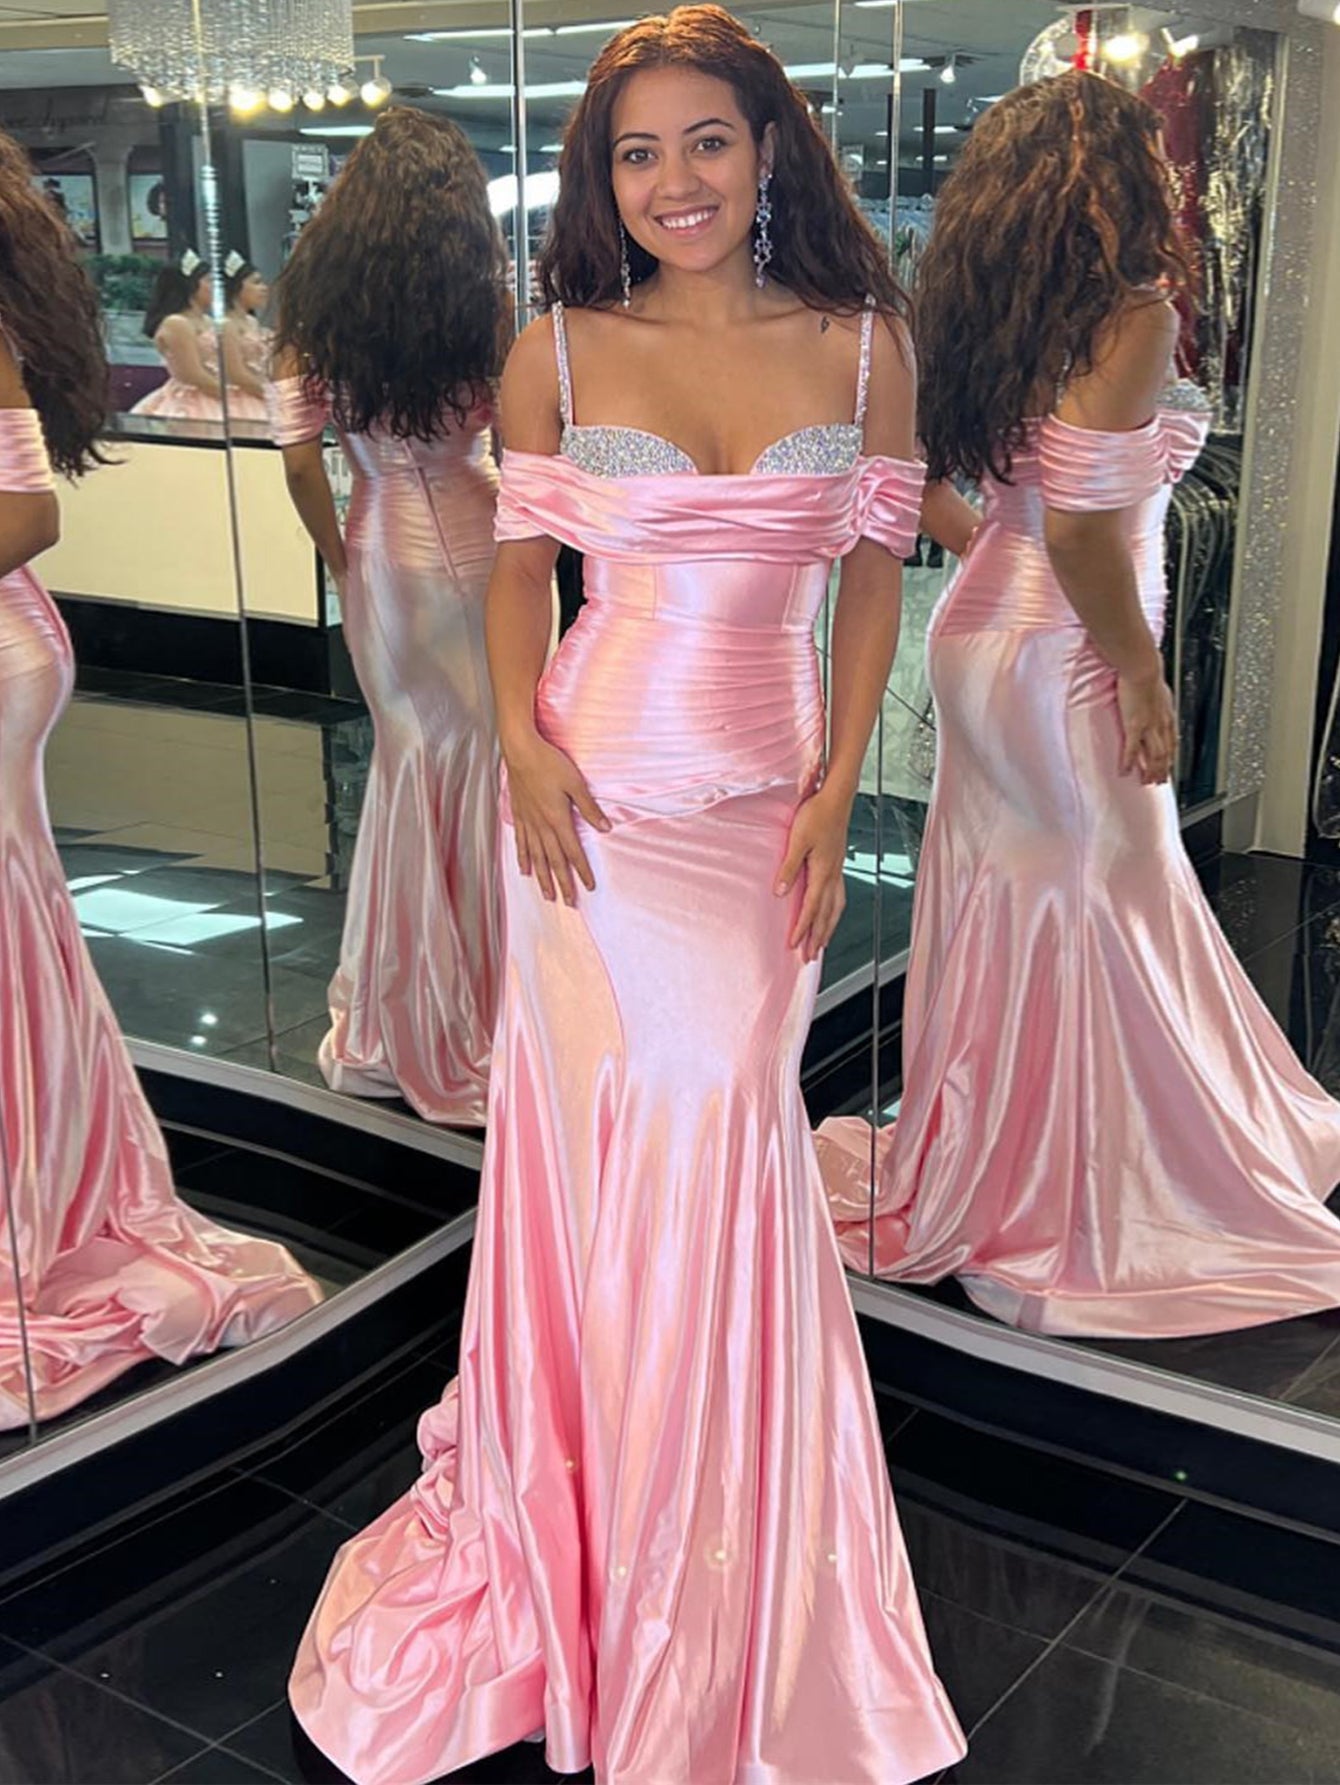 Pink Sweetheart Neck Long Mermaid Prom Dress